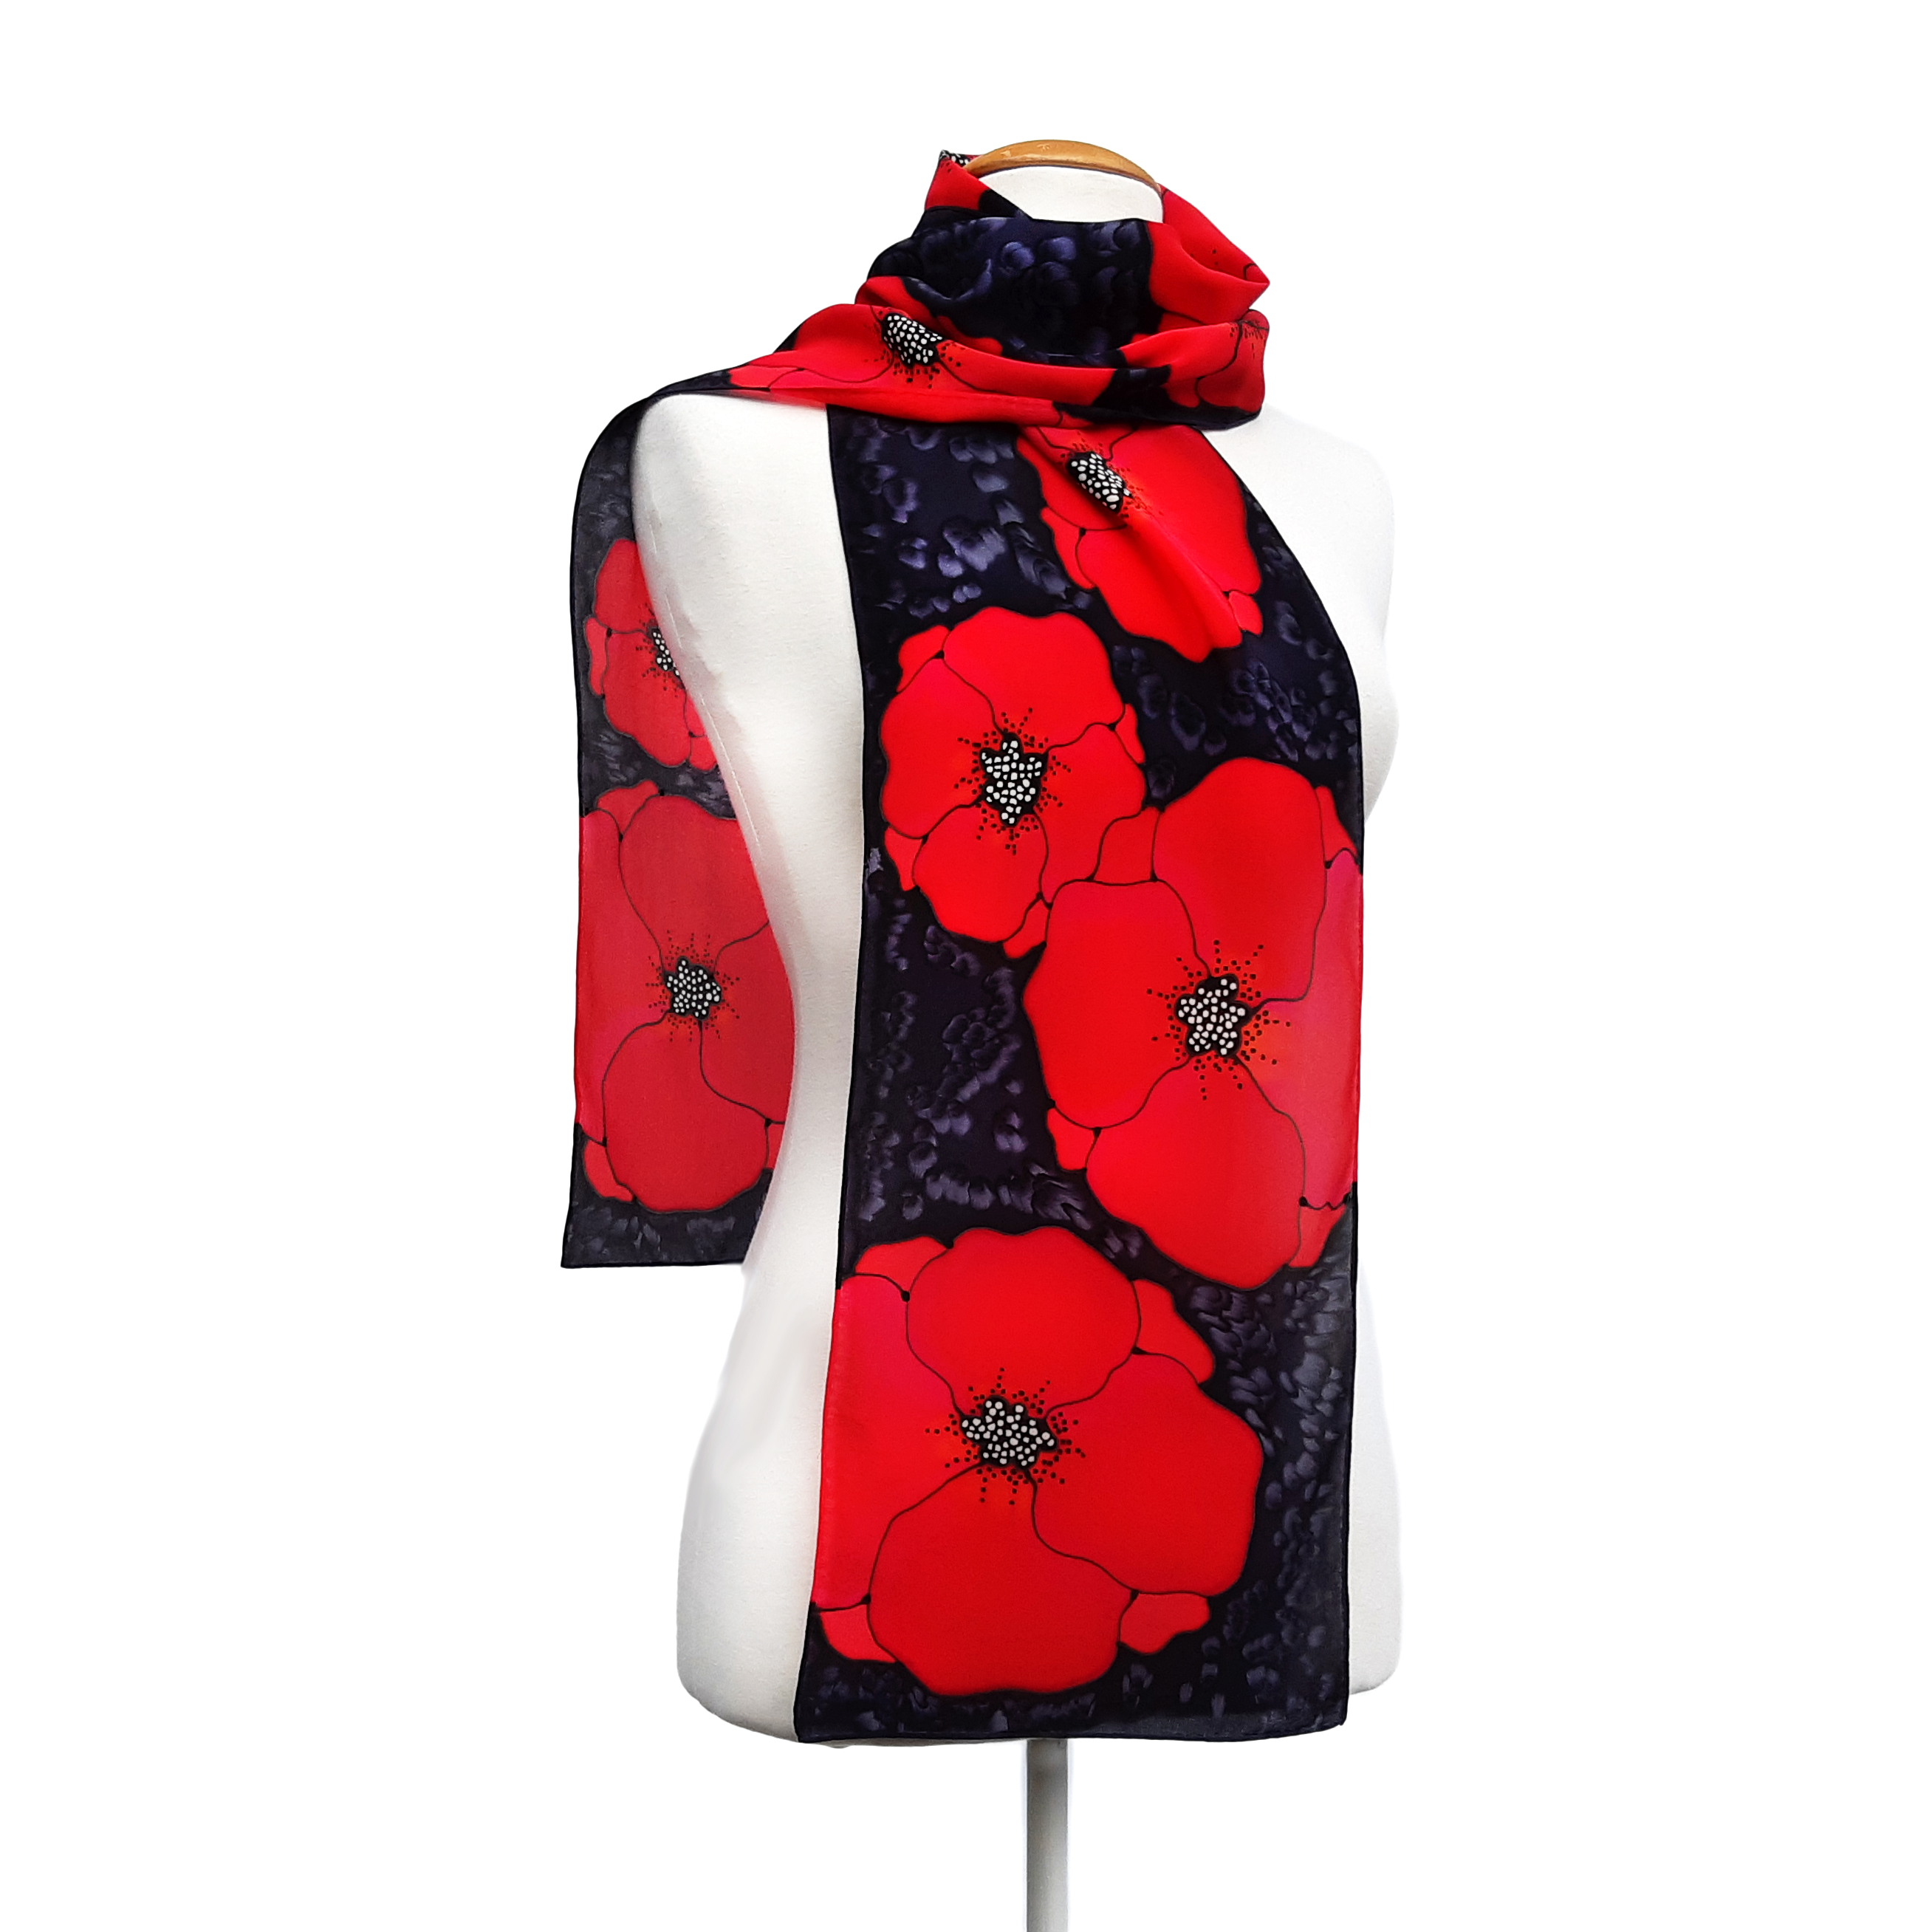 silk scarf hand painted poppy art design red and black ladies long scarf handmade by Lynne Kiel